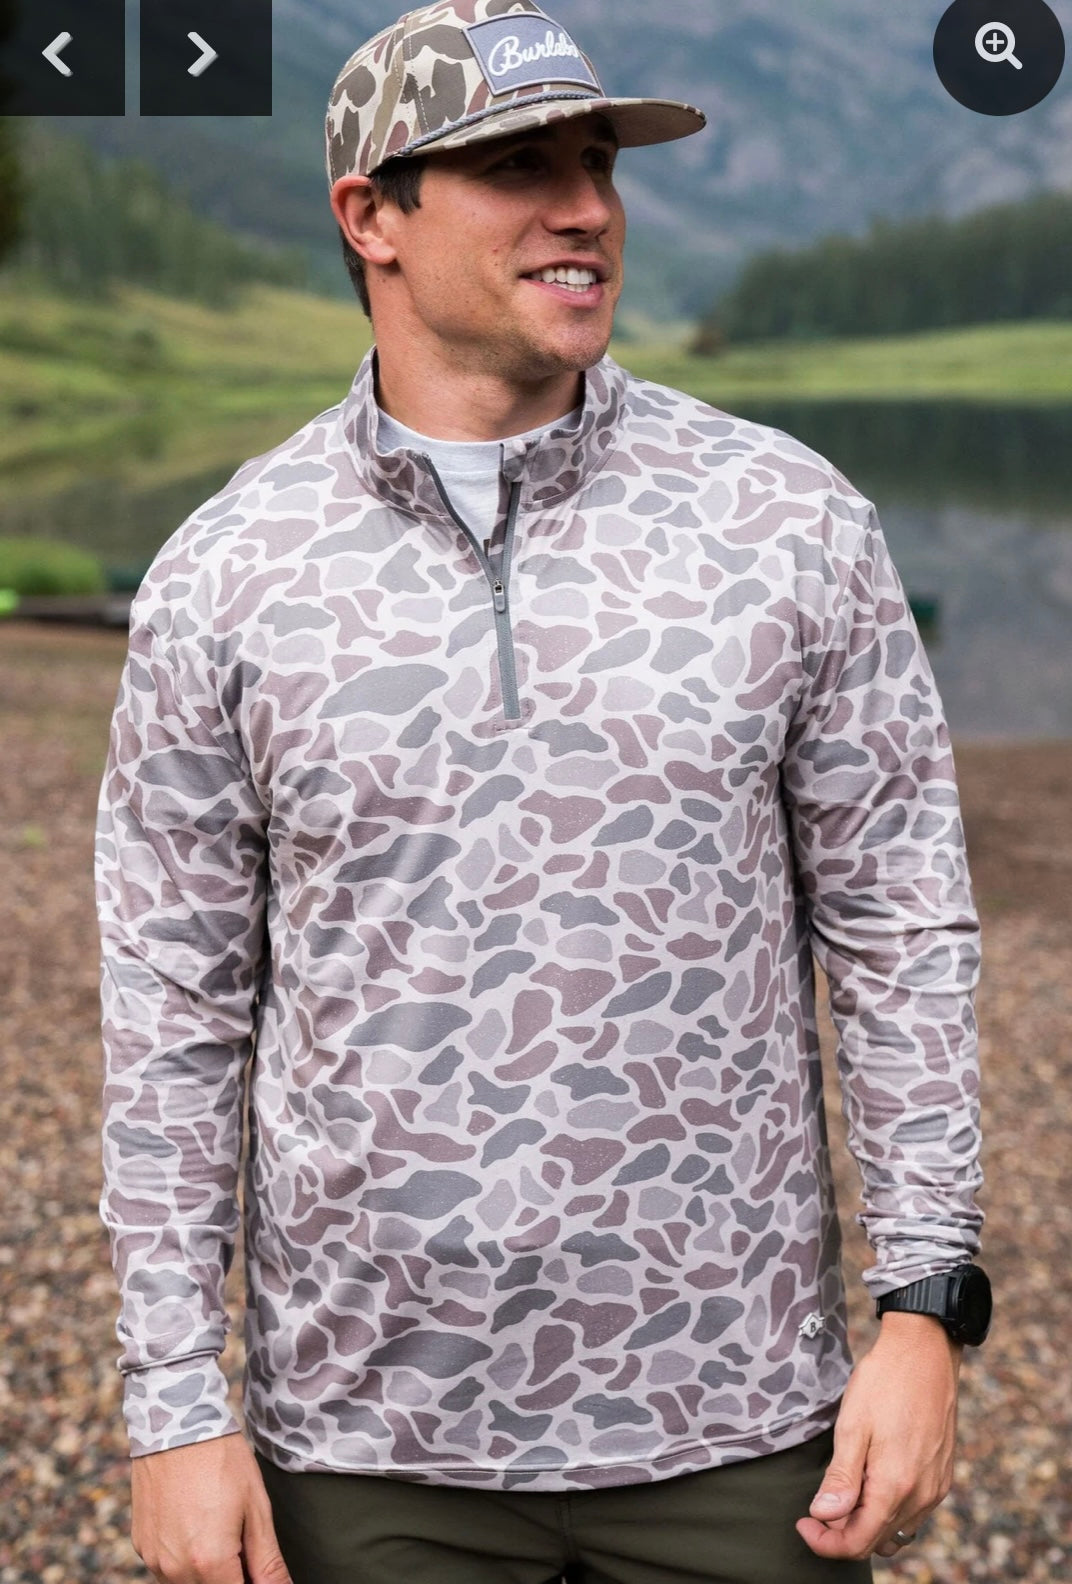 Quarter zip long-sleeve pullover in a classic deer camo print